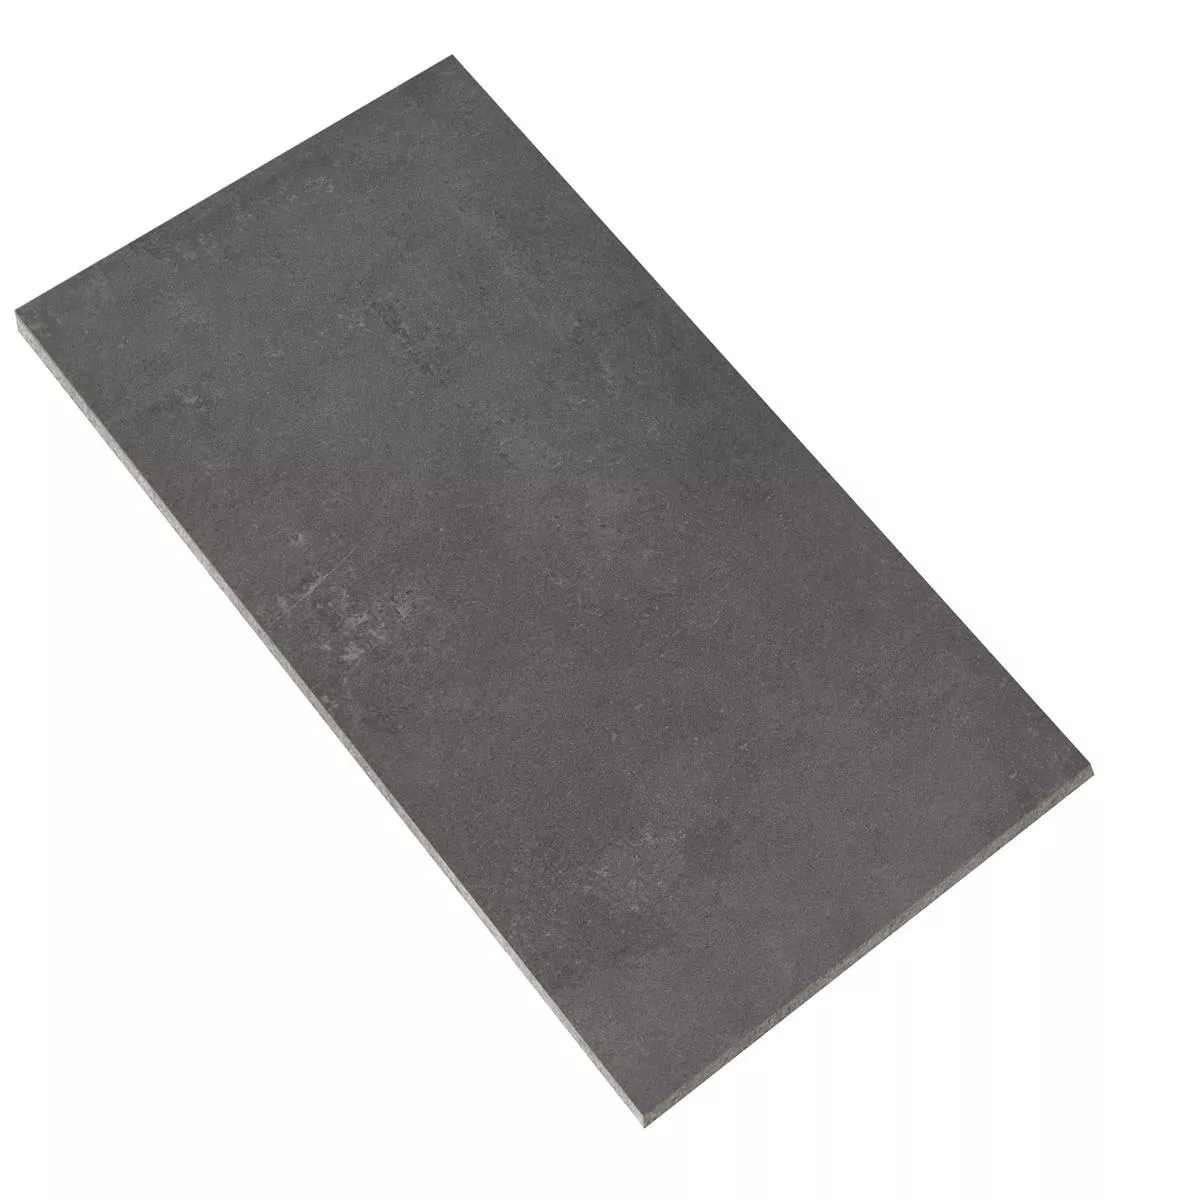 Sample Vloertegels Cement Optic Nepal Slim Antraciet 50x100cm